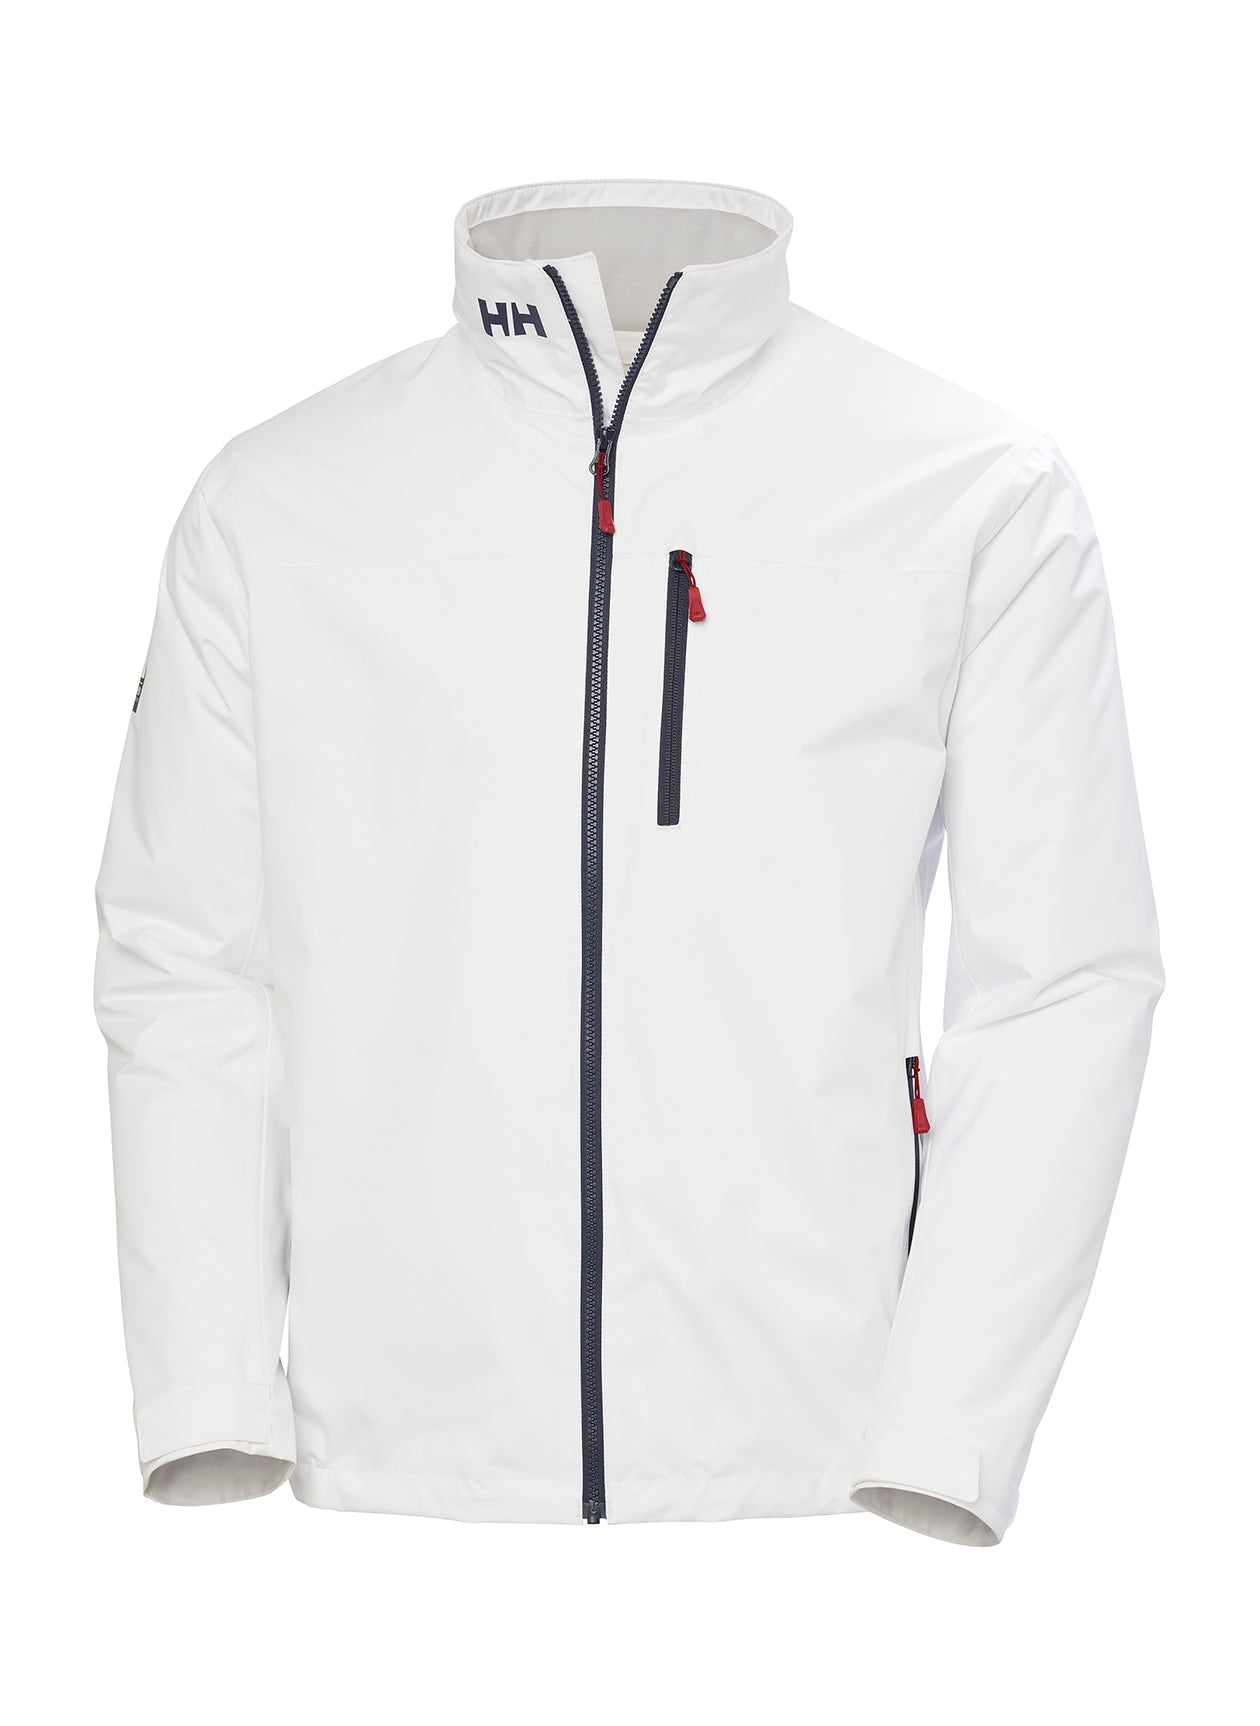 Helly Hansen Crew Midlayer Custom Jackets, White